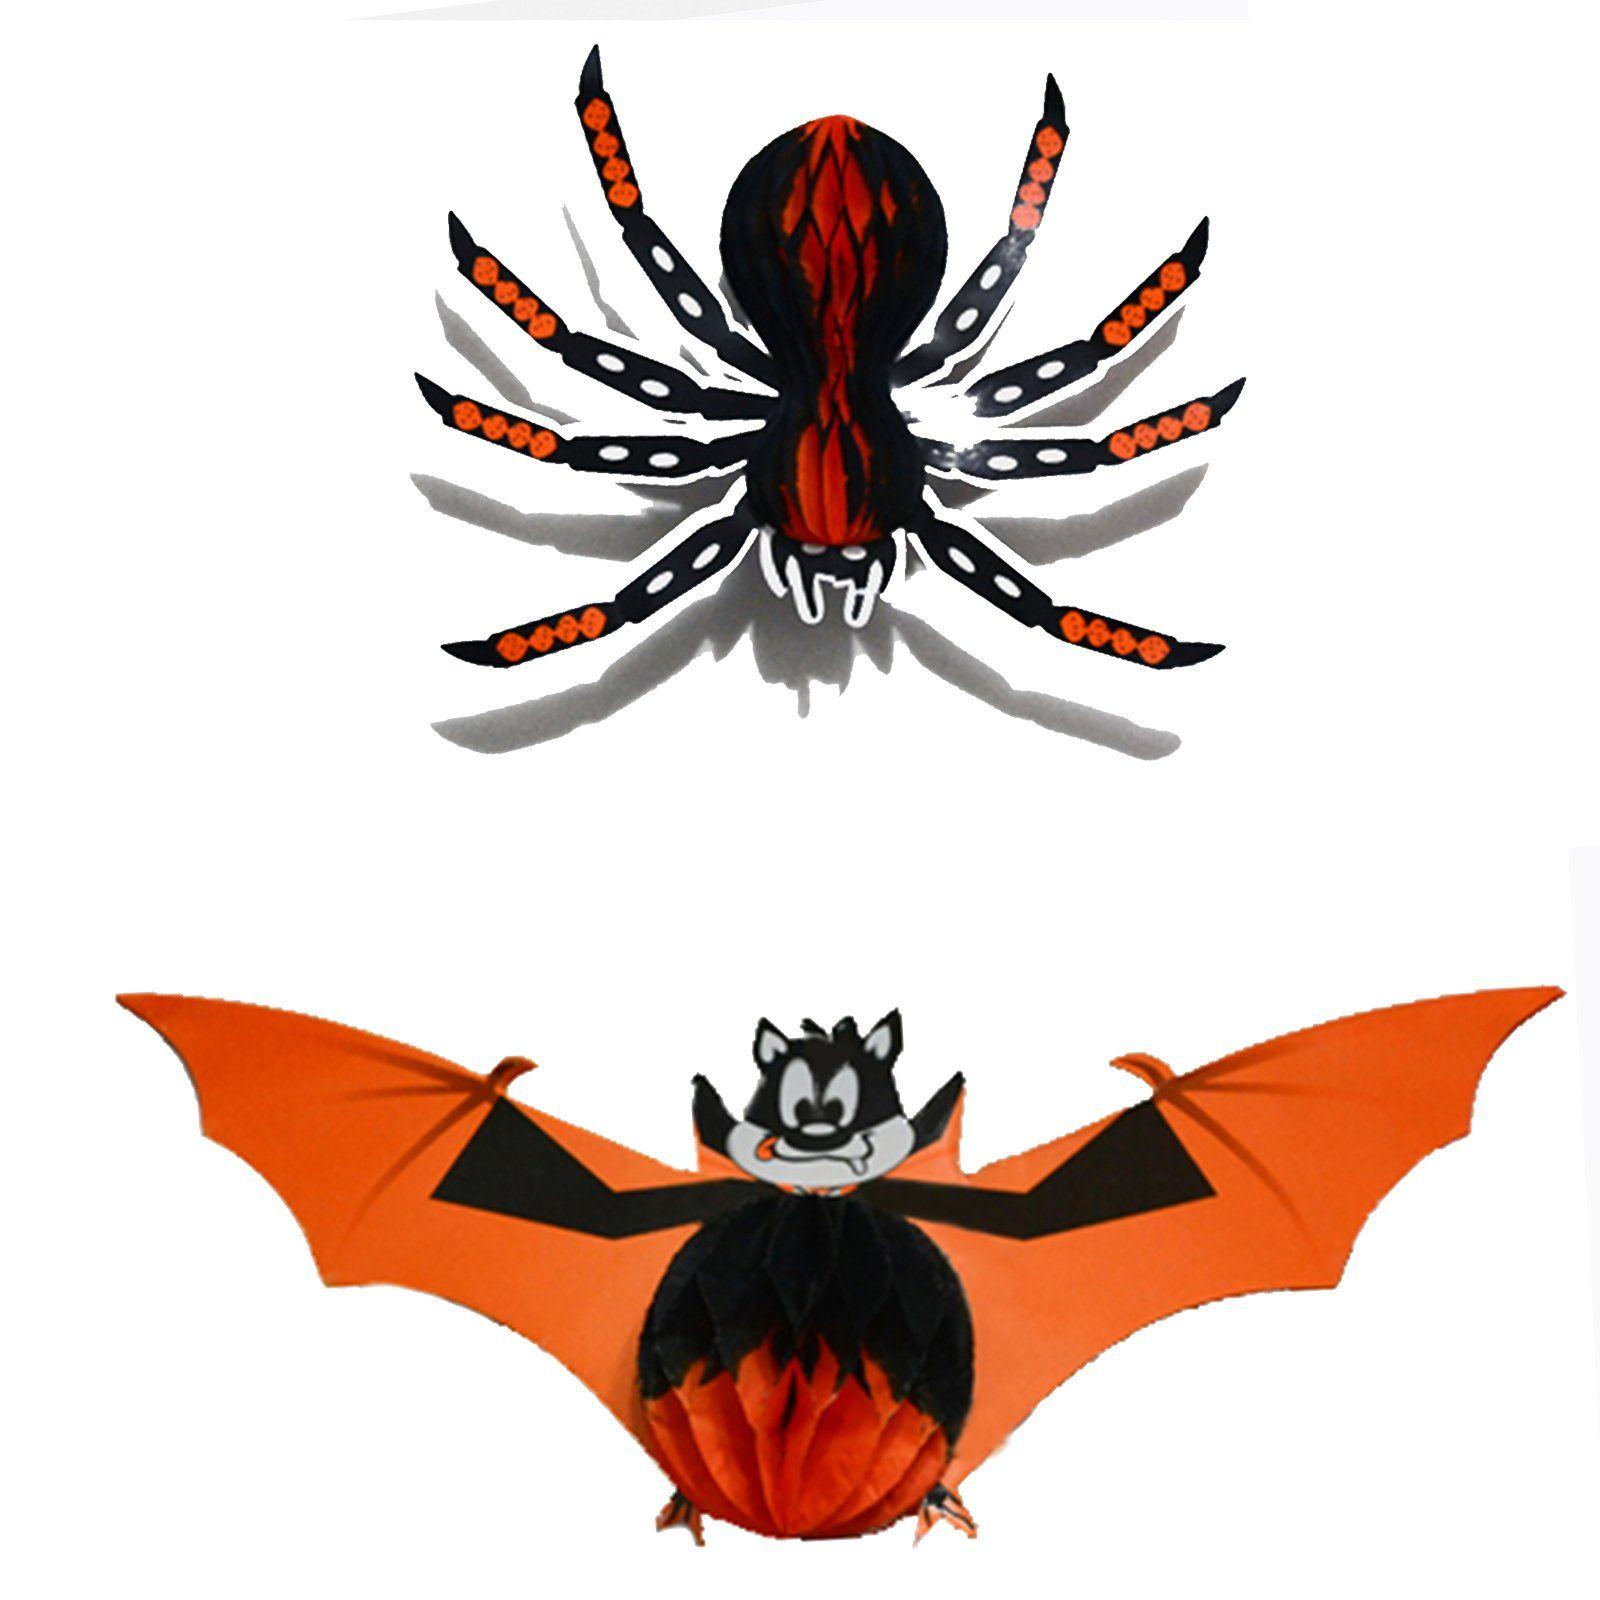 Orange and Black Funny Logo - 3 pk Honeycomb Halloween Hanging Decorations Bat Spider FUNNY Props ...